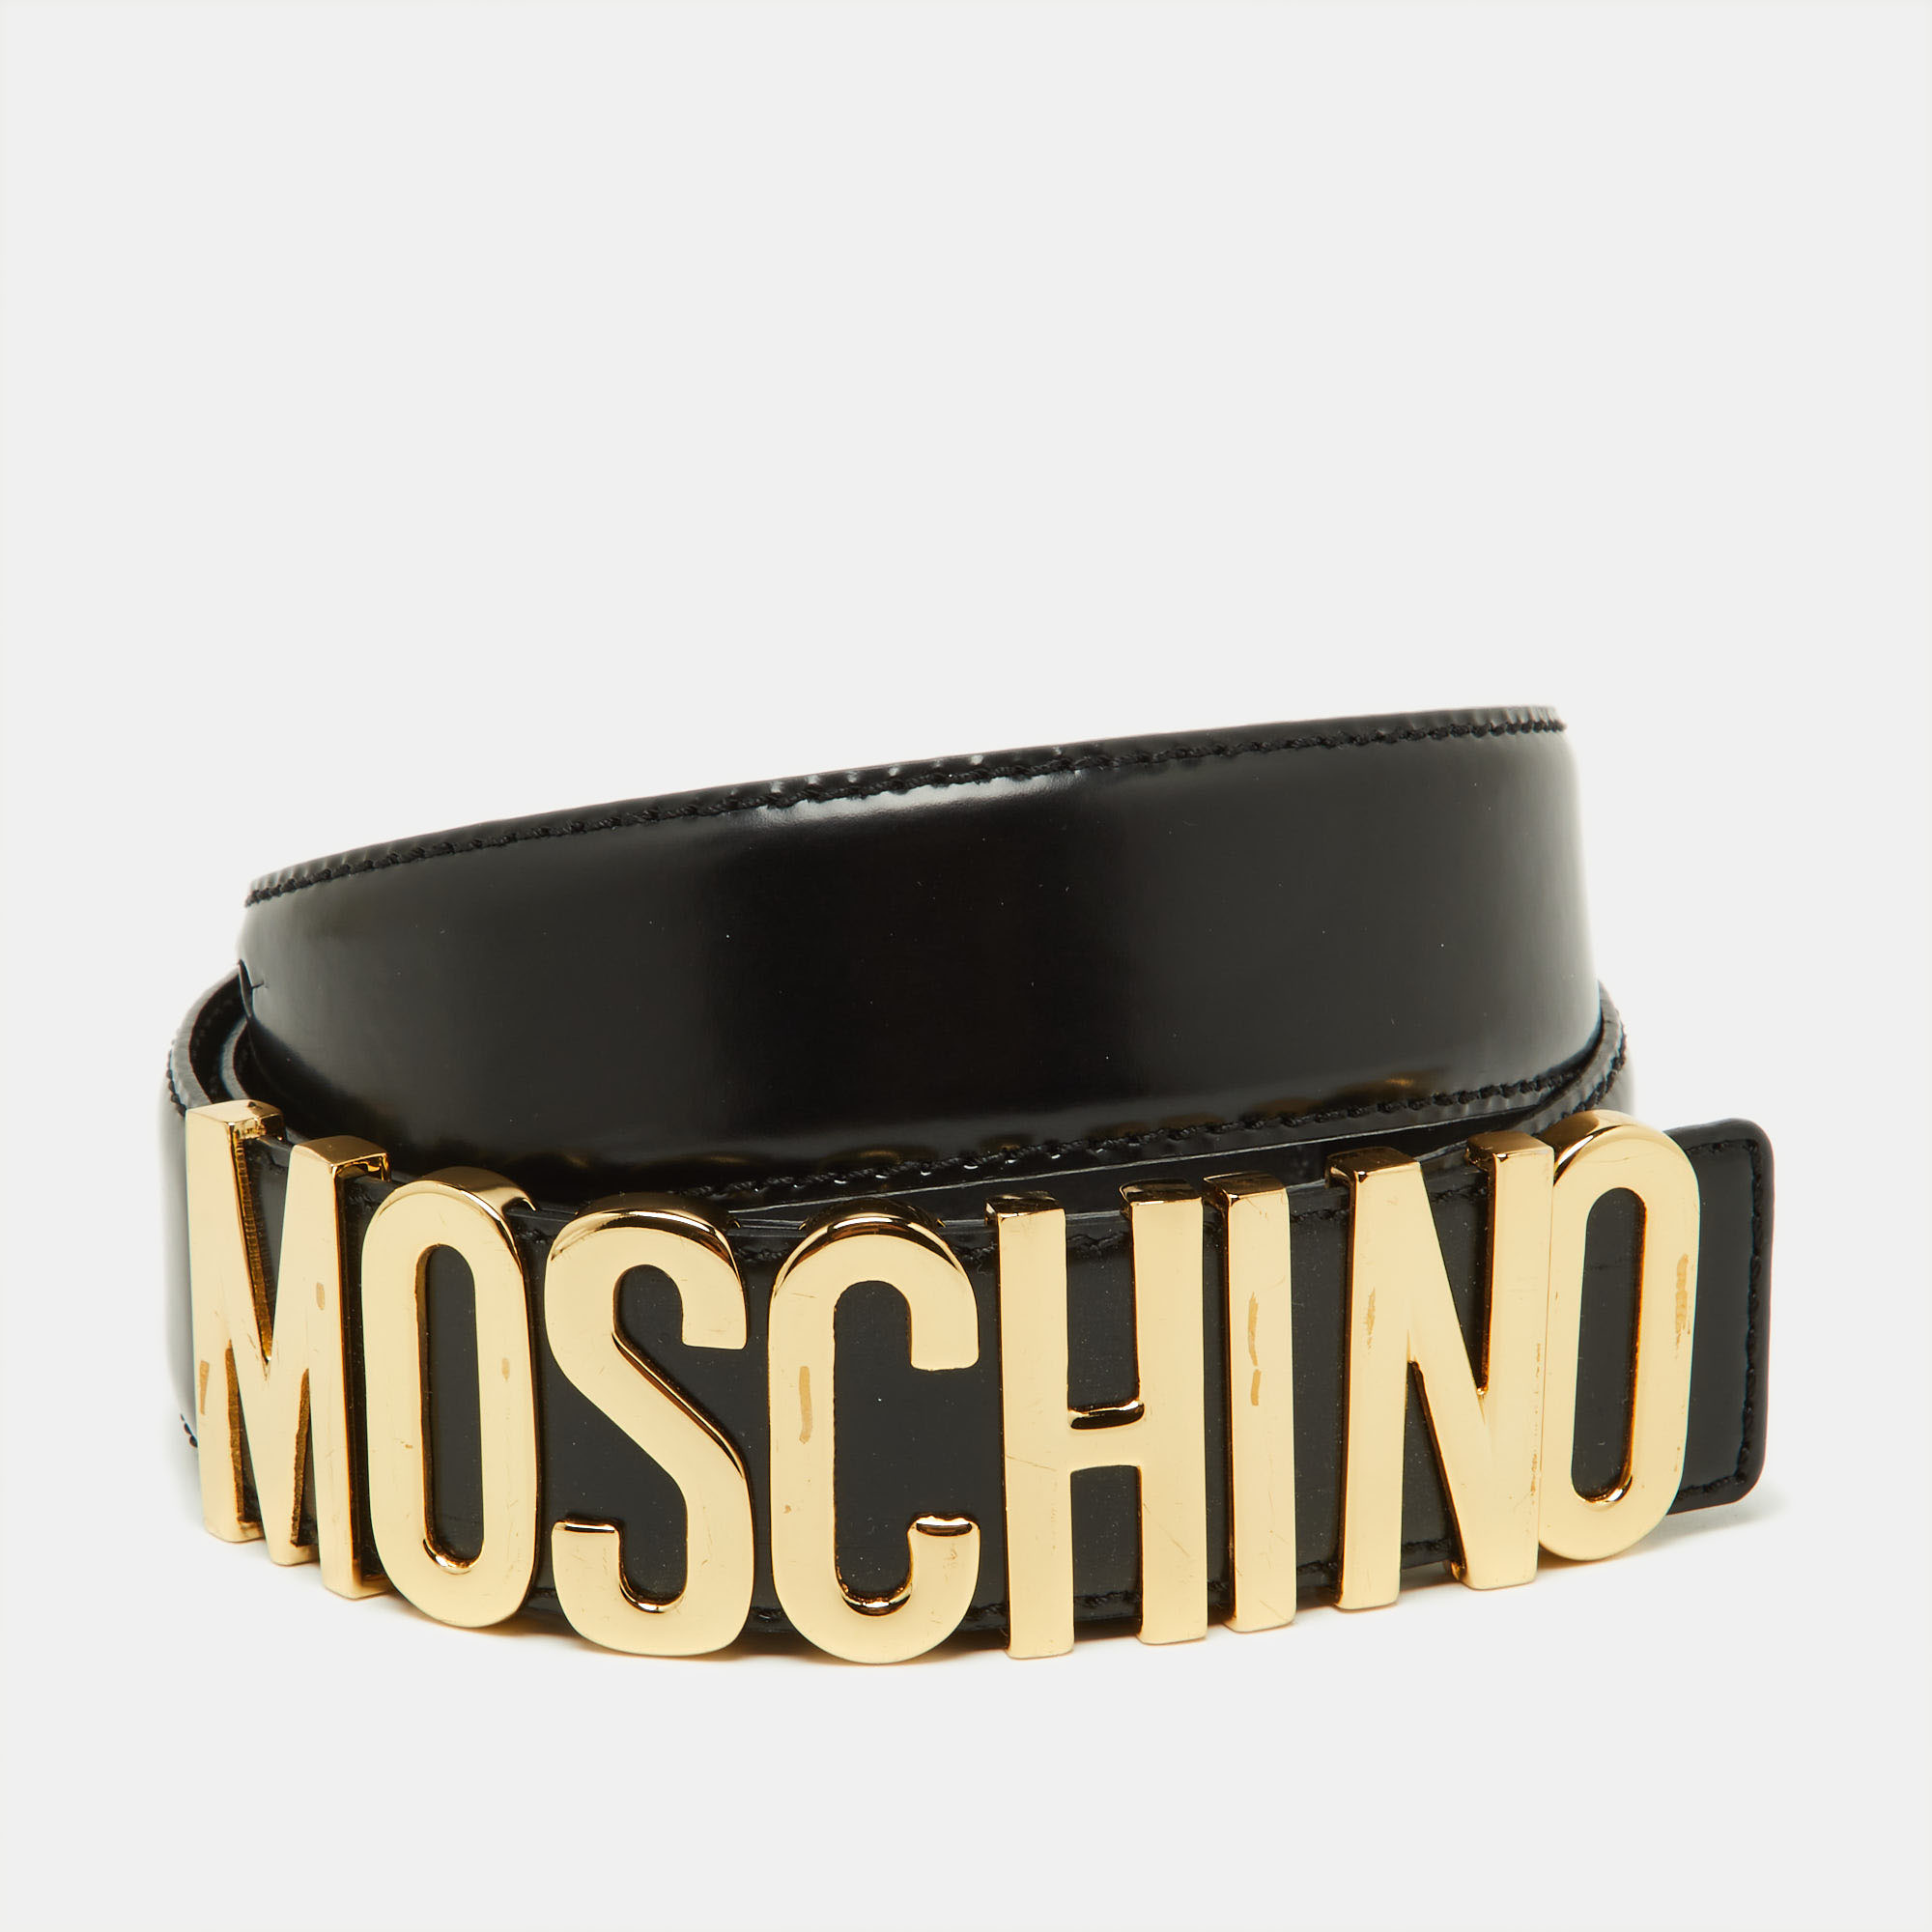 Moschino black leather classic logo waist belt 110 cm